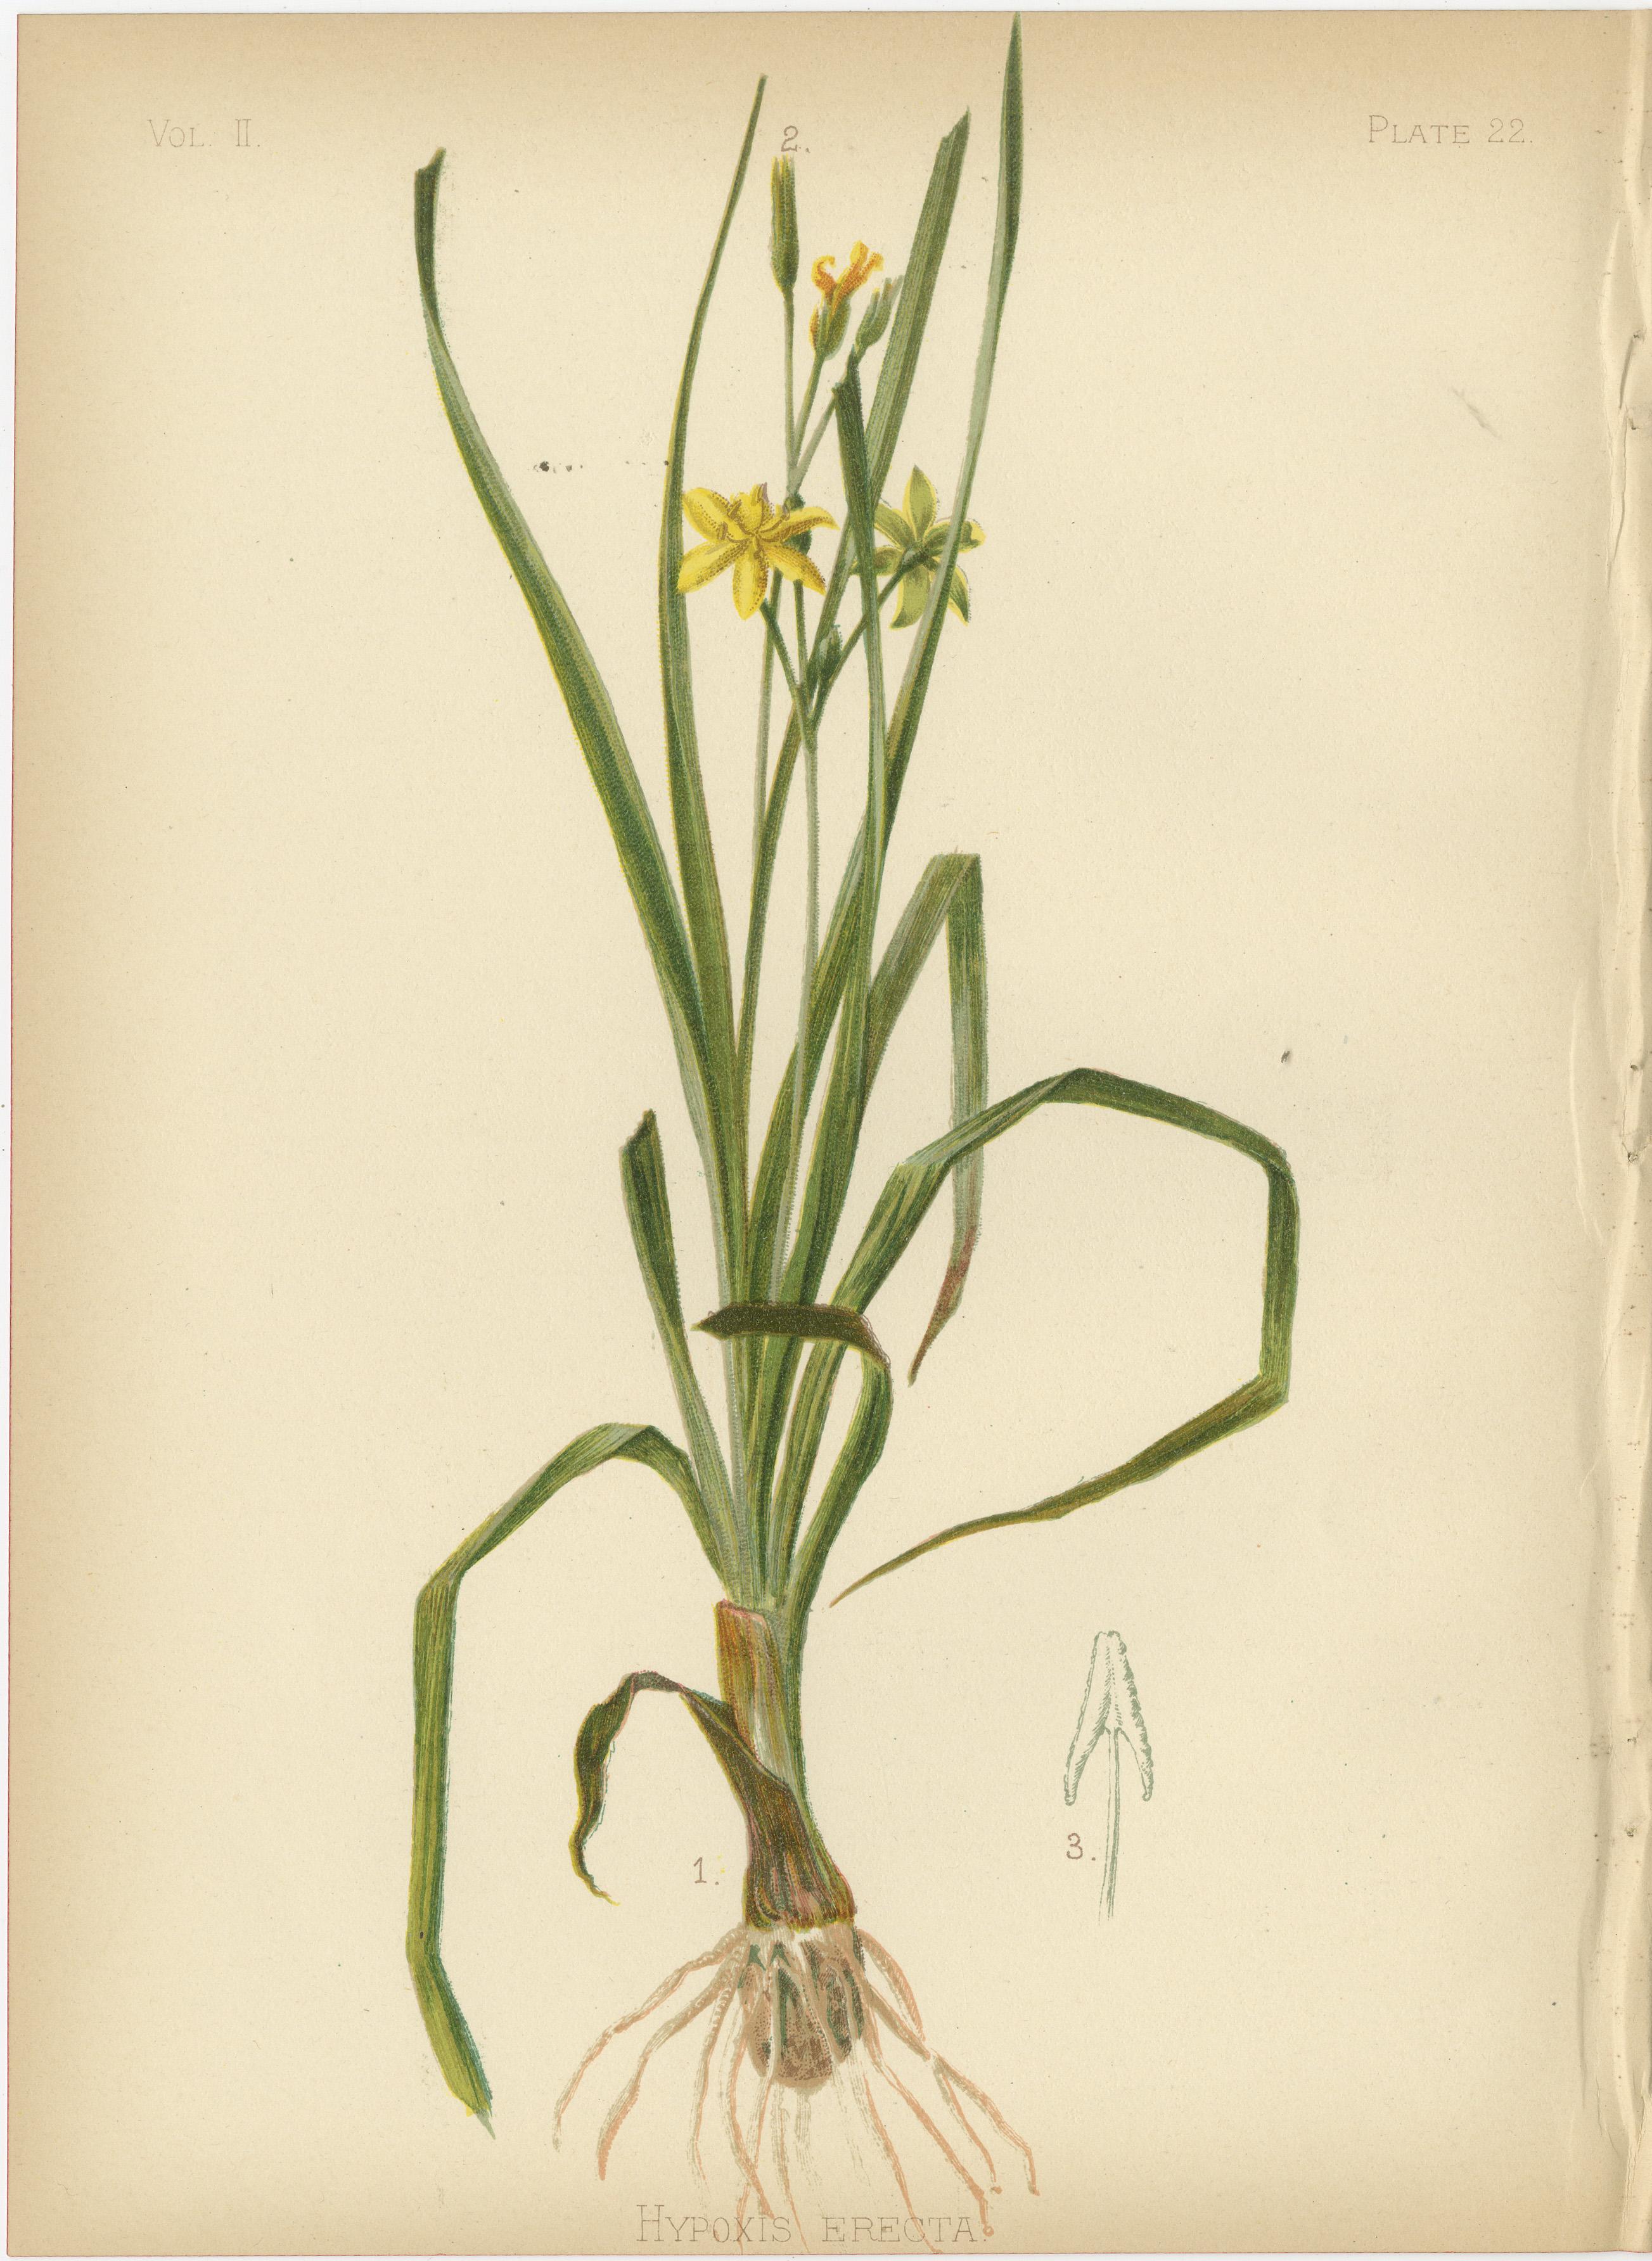 Verdant Vintage: A Collection of 1879 Botanical Illustrations 2